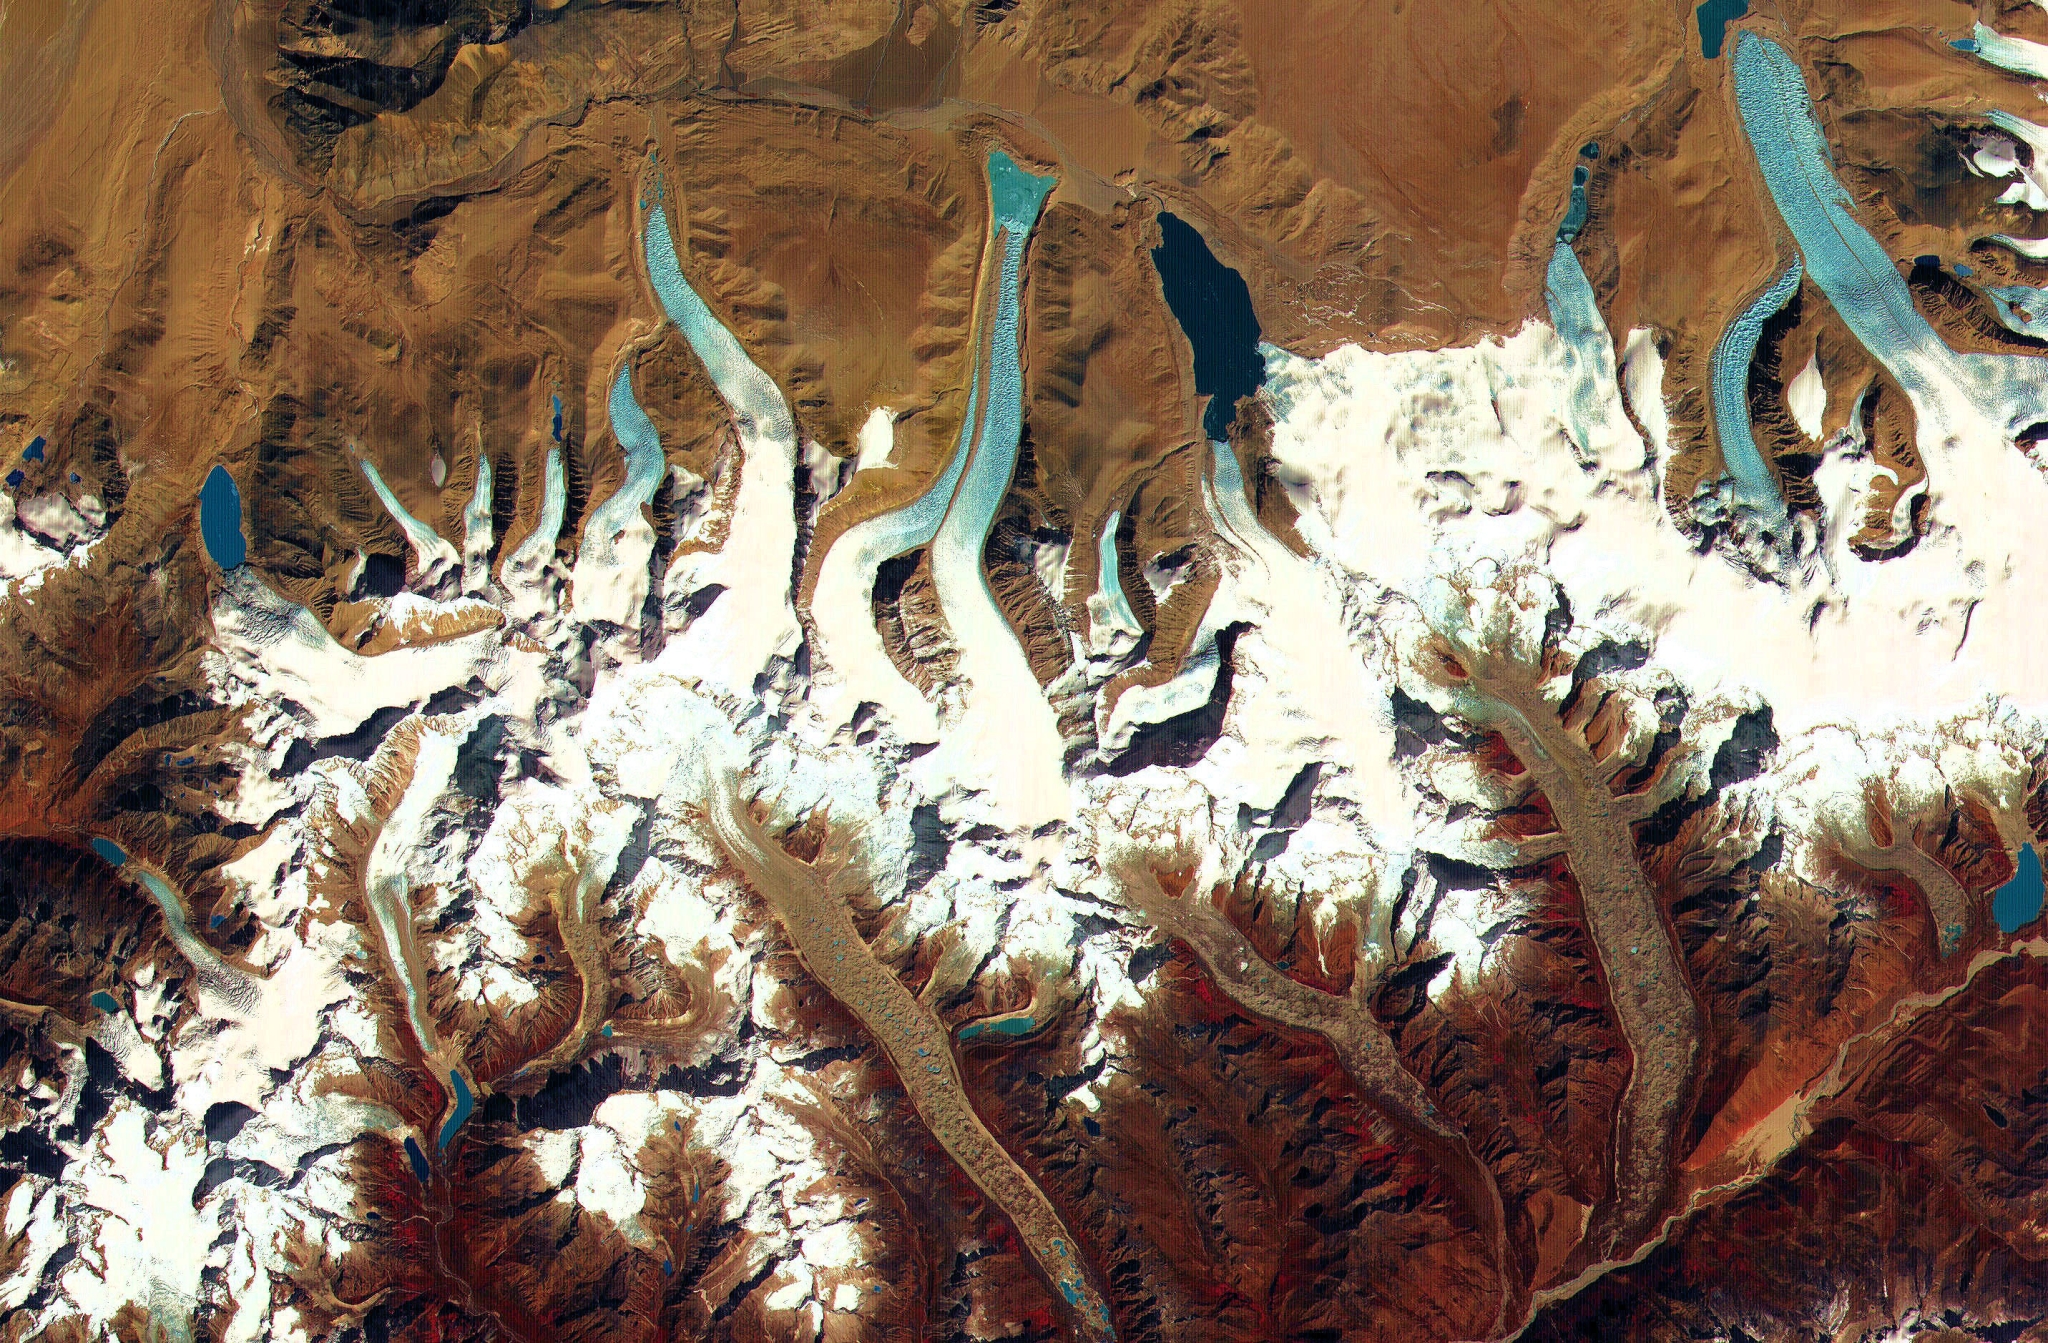 aster_bhutan_glaciers_lrg2.jpg